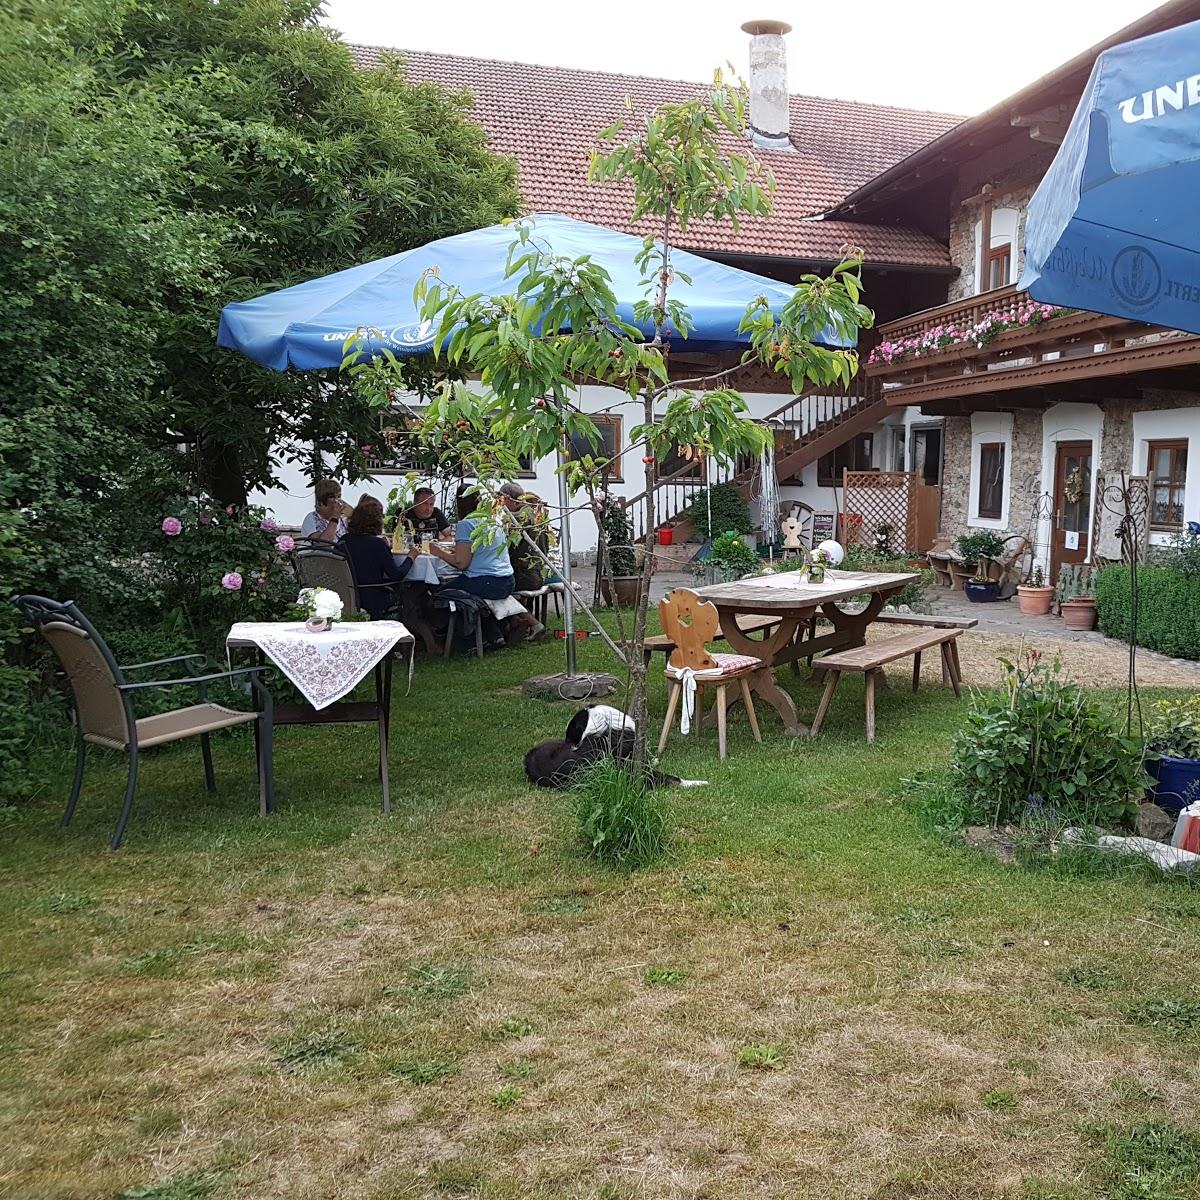 Restaurant "Biohof Eisgruber - Ferien & Erlebnishof" in Gars am Inn